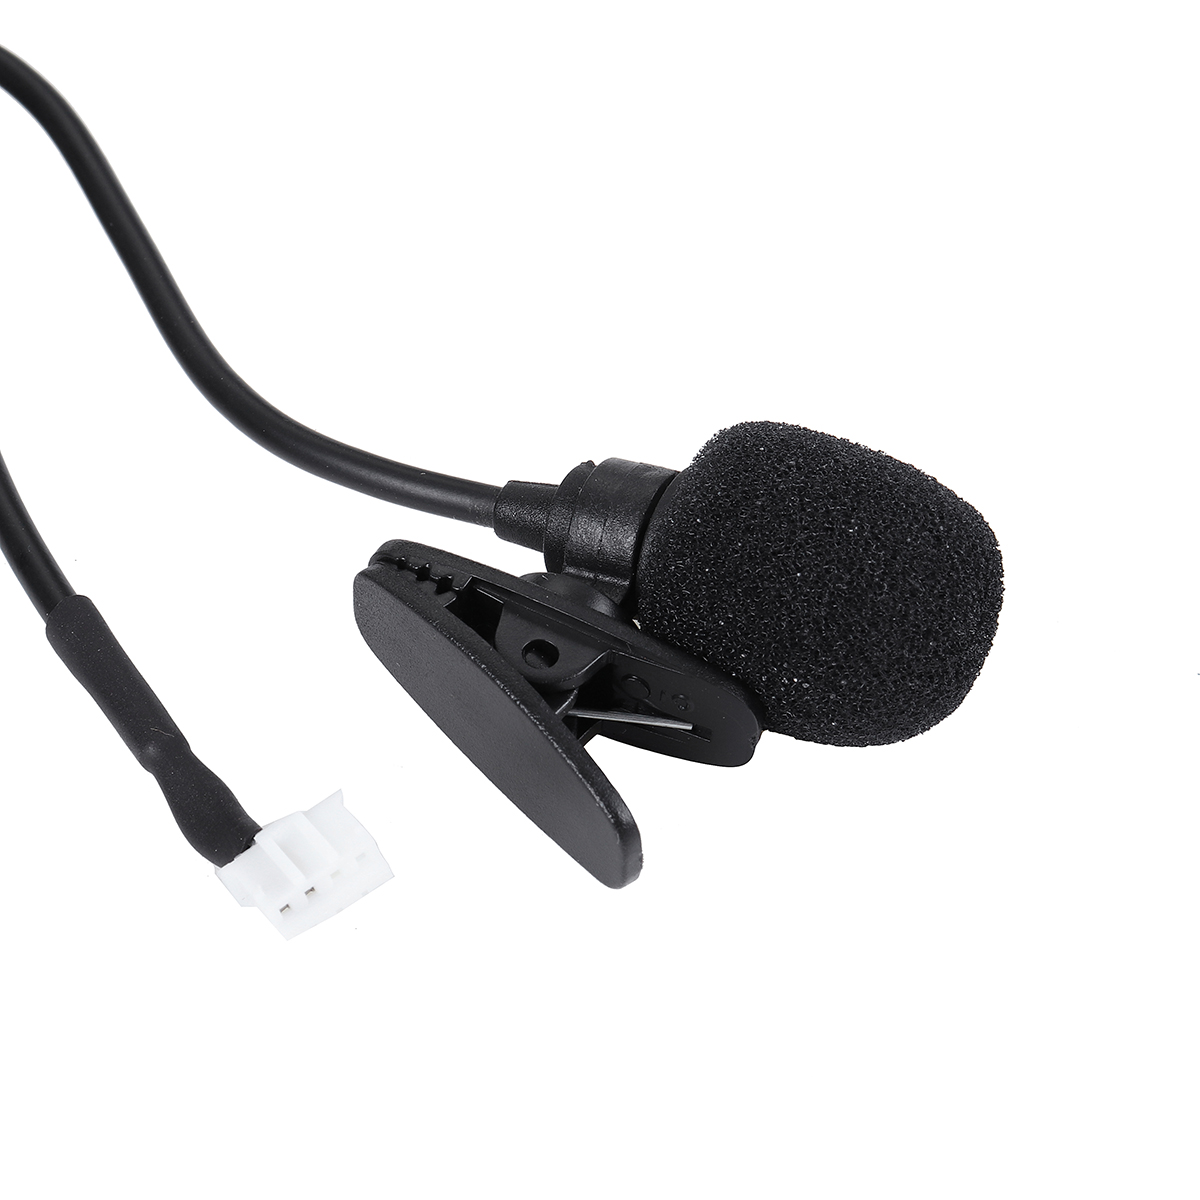 12V Car bluetooth stereo Aux adaptor module Cable handfree Microphone For BMW E60 E63 E64 E65 E66 Serie 1 3